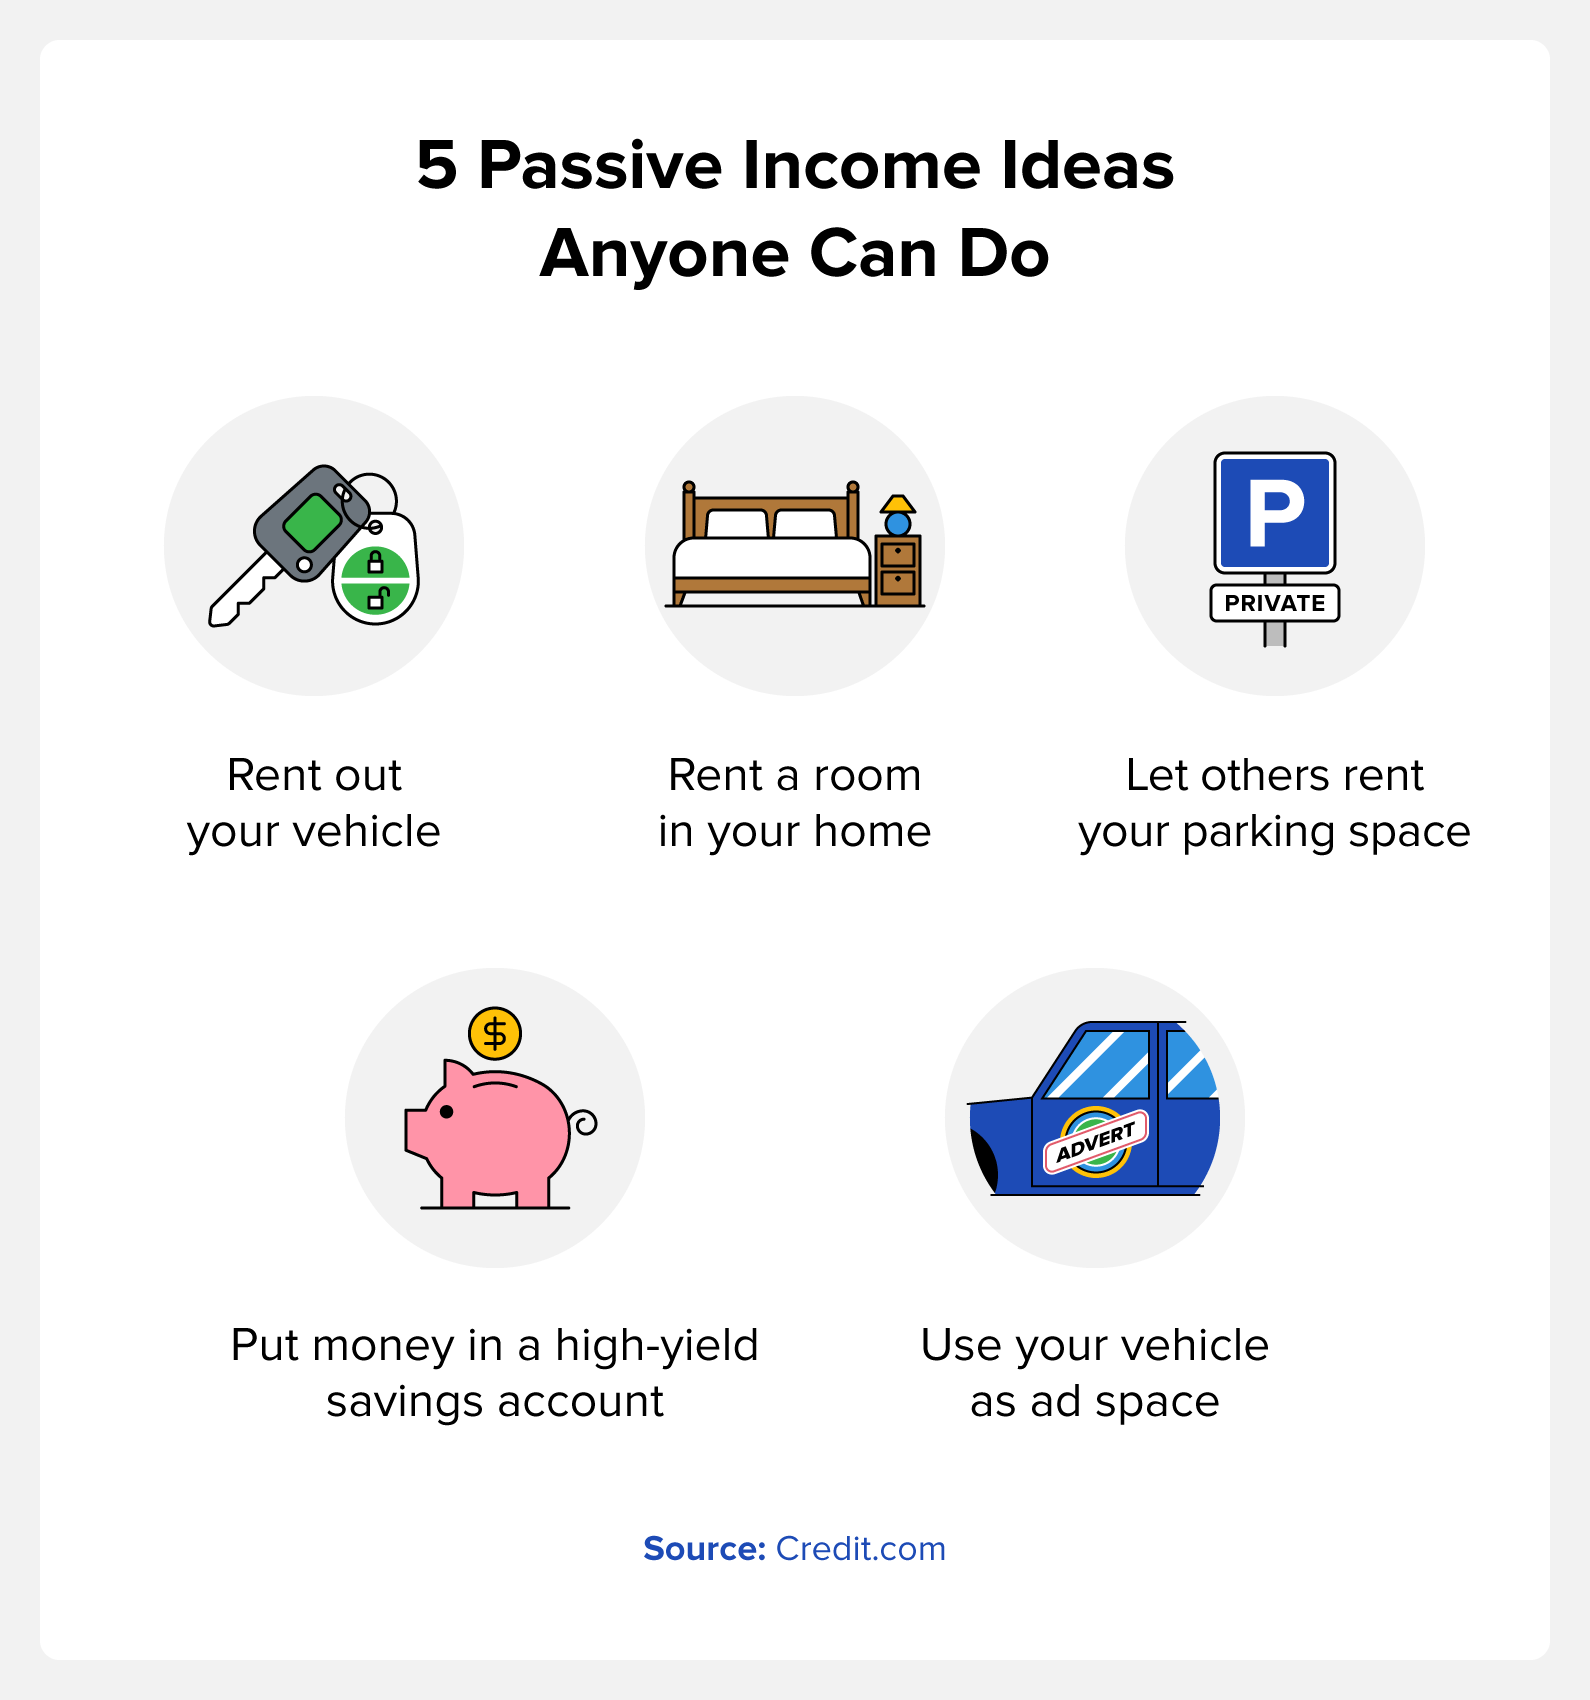 5 passive income ideas anyone can do